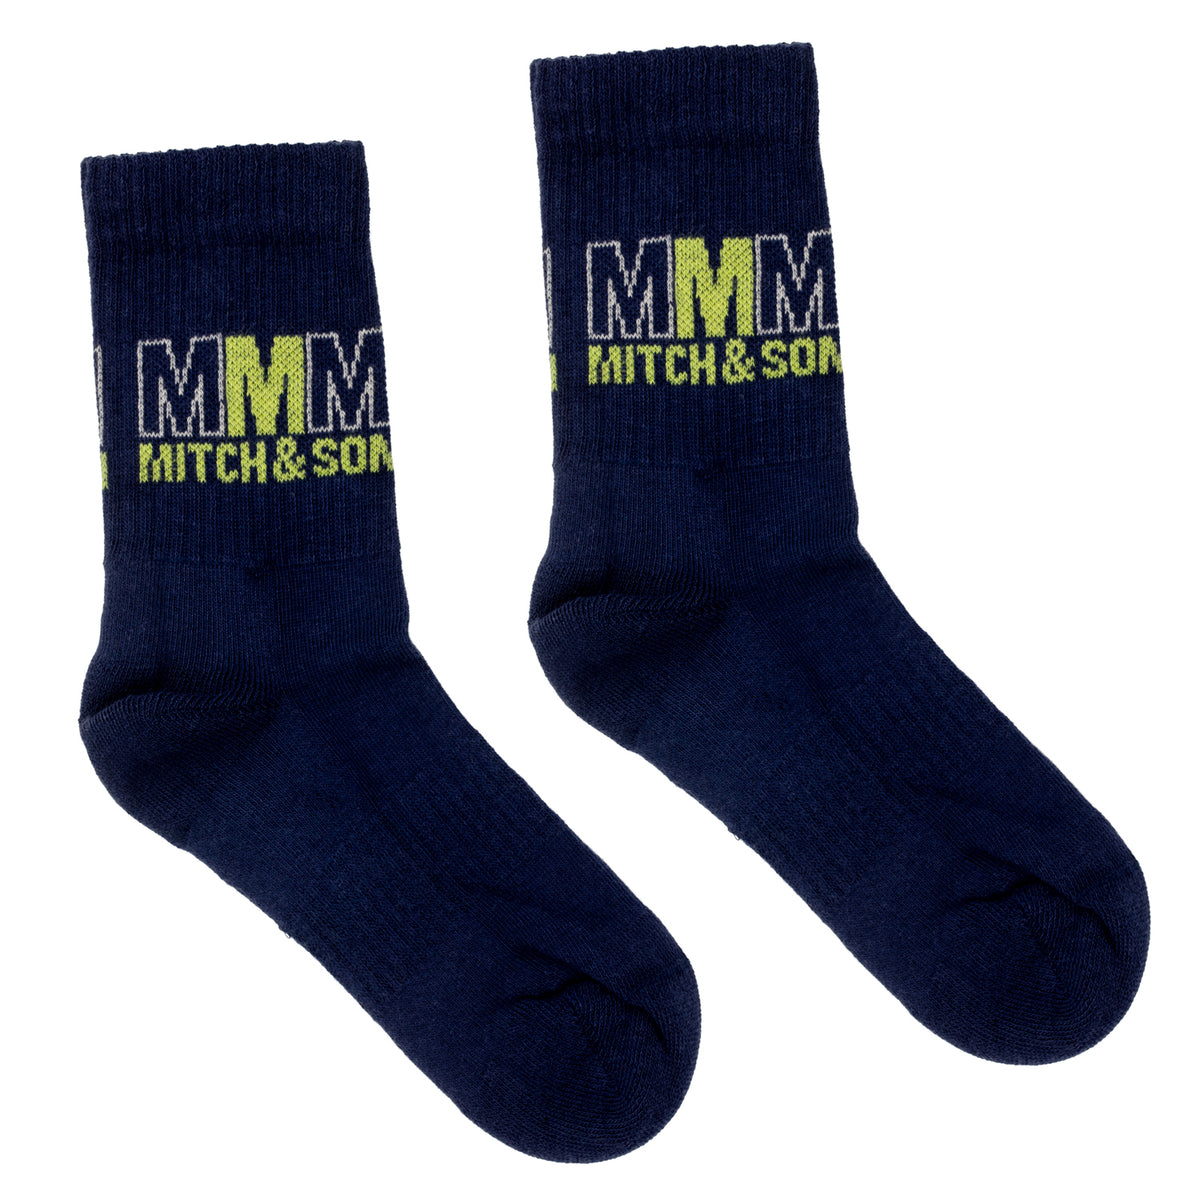 Mitch & Son Navy 'West' White Socks